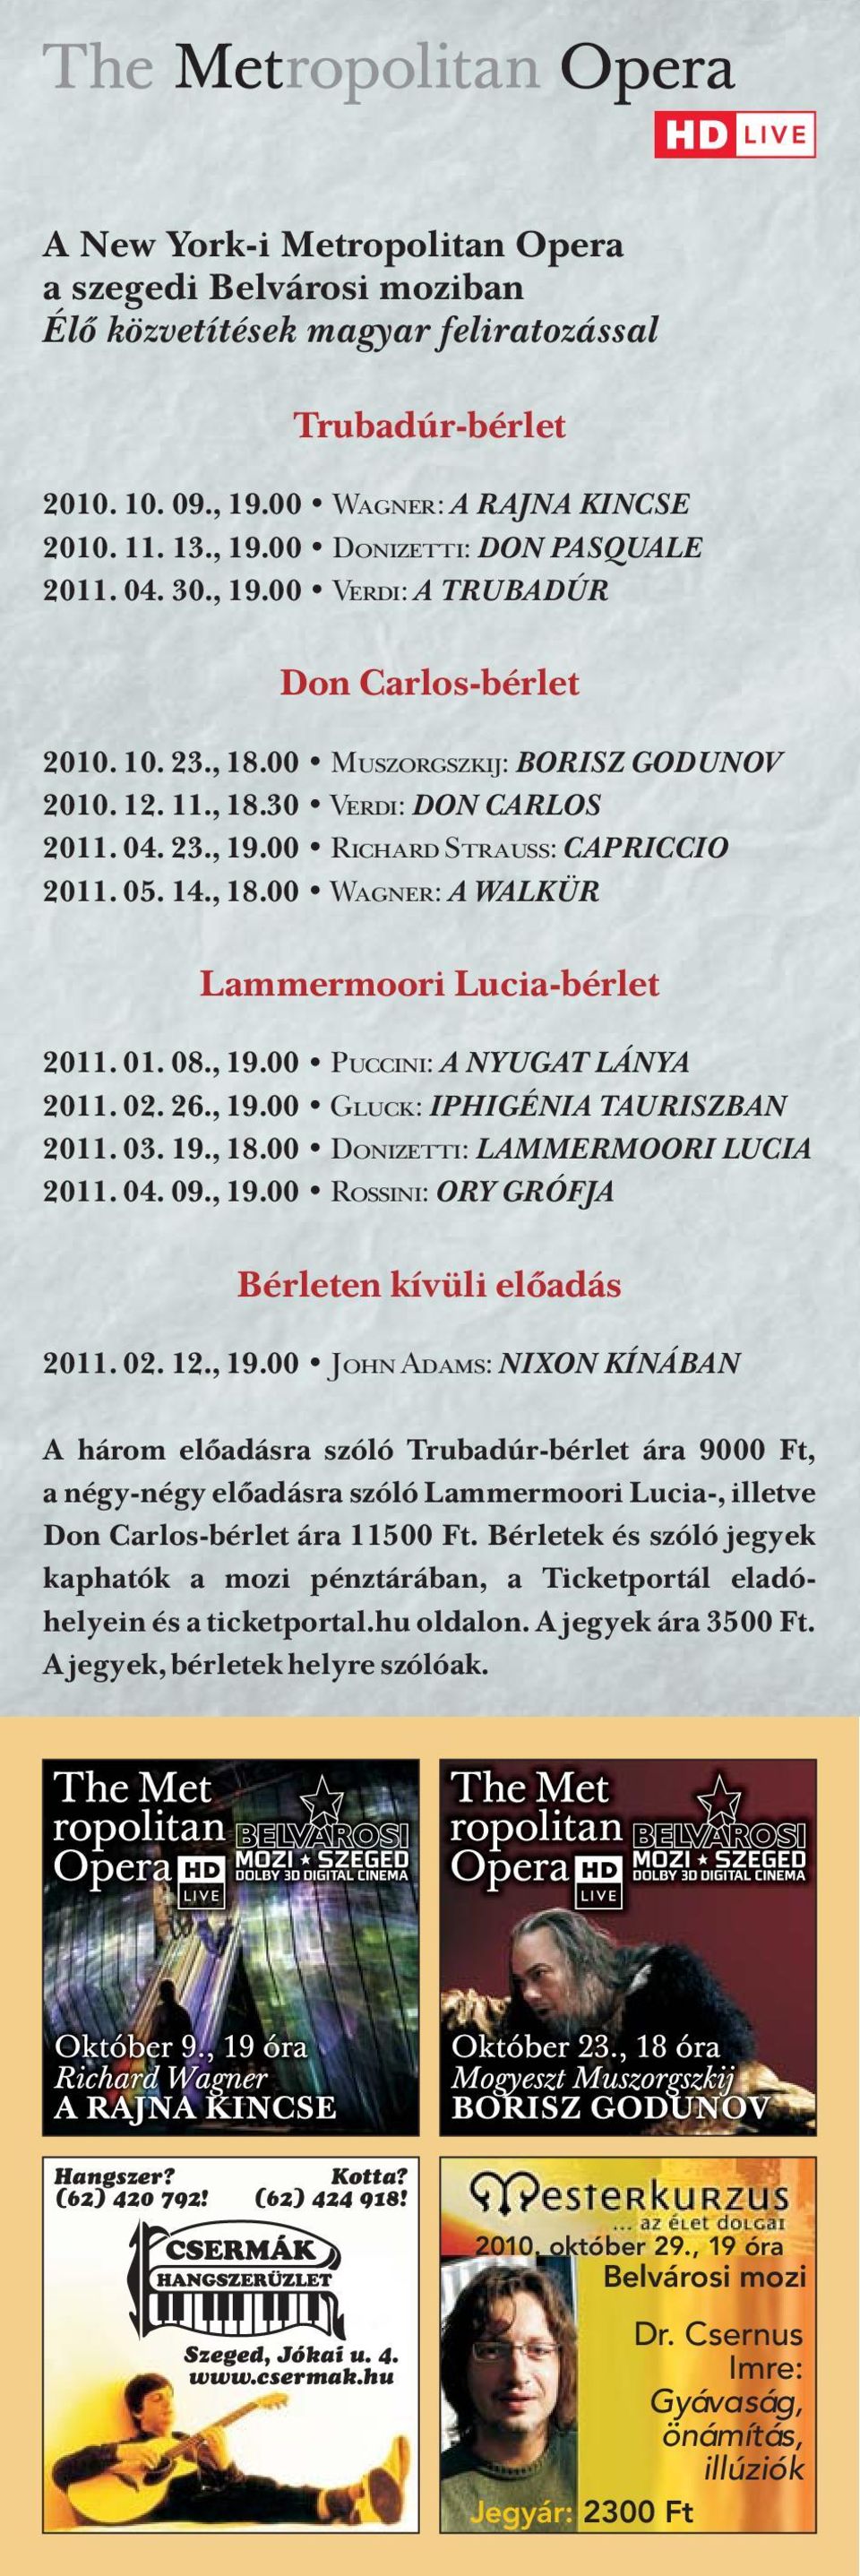 14., 18.00 Wagner: A WALKÜR Lammermoori Lucia-bérlet 2011. 01. 08., 19.00 Puccini: A NYUGAT LÁNYA 2011. 02. 26., 19.00 Gluck: IPHIGÉNIA TAURISZBAN 2011. 03. 19., 18.00 Donizetti: LAMMERMOORI LUCIA 2011.